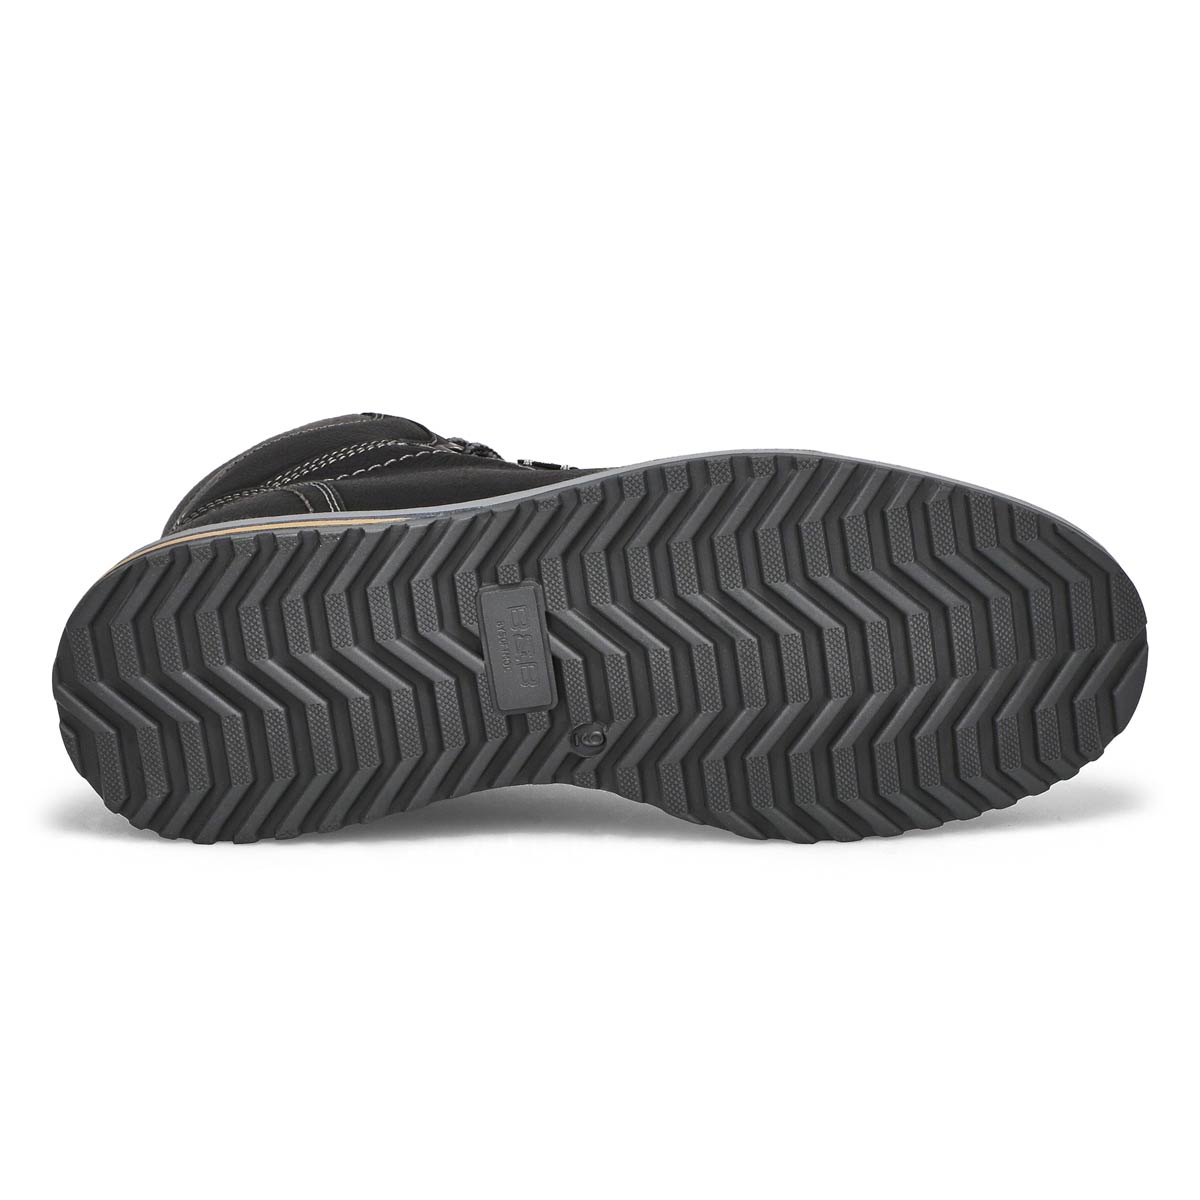 Men's Bulldozer Ankle Boot - Black